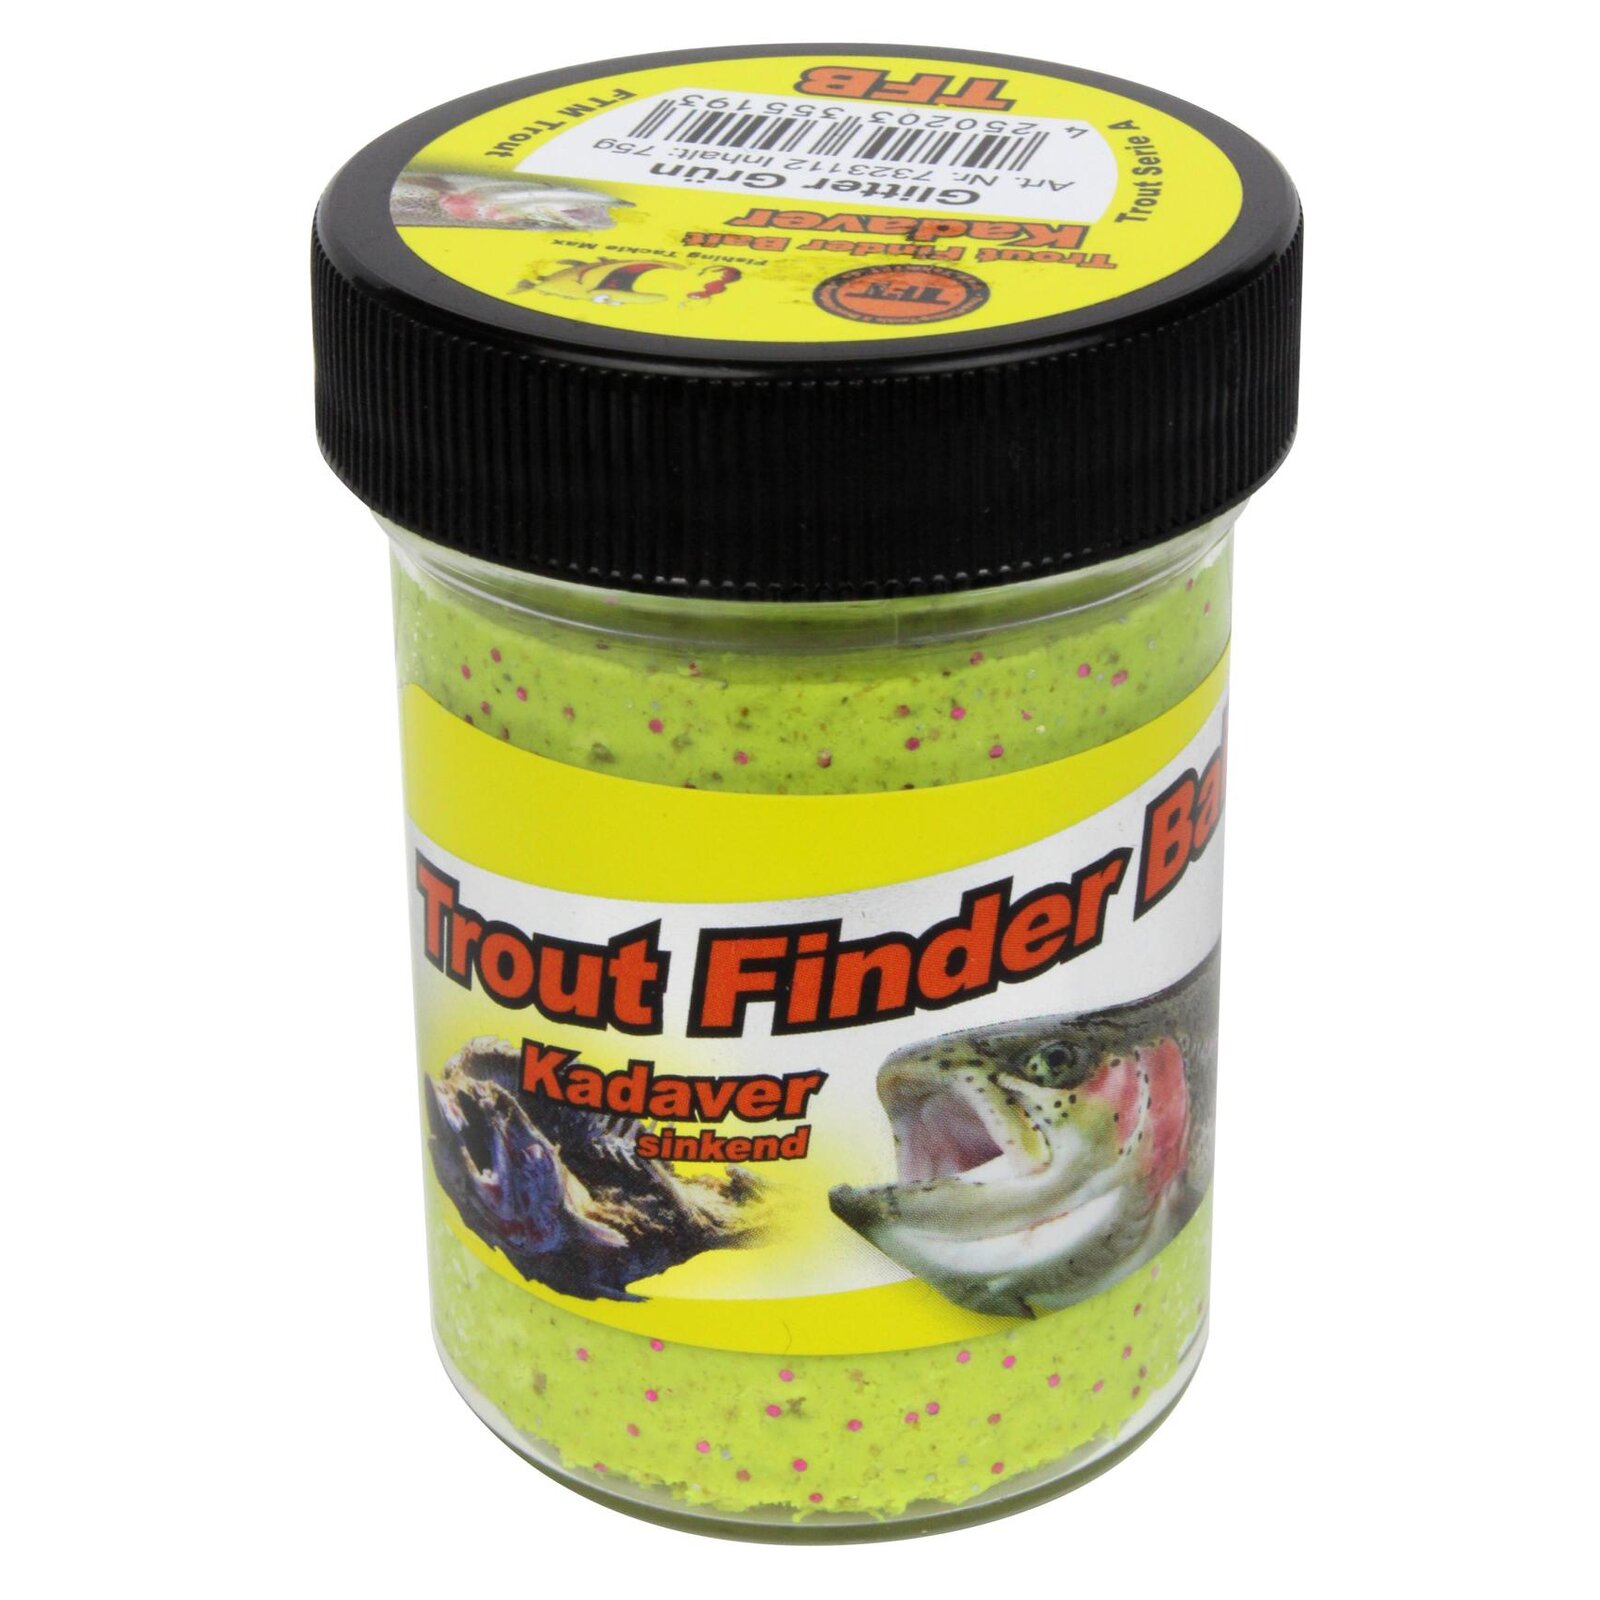 FTM Trout Finder Bait Kadaver Glitter sinkend 50g